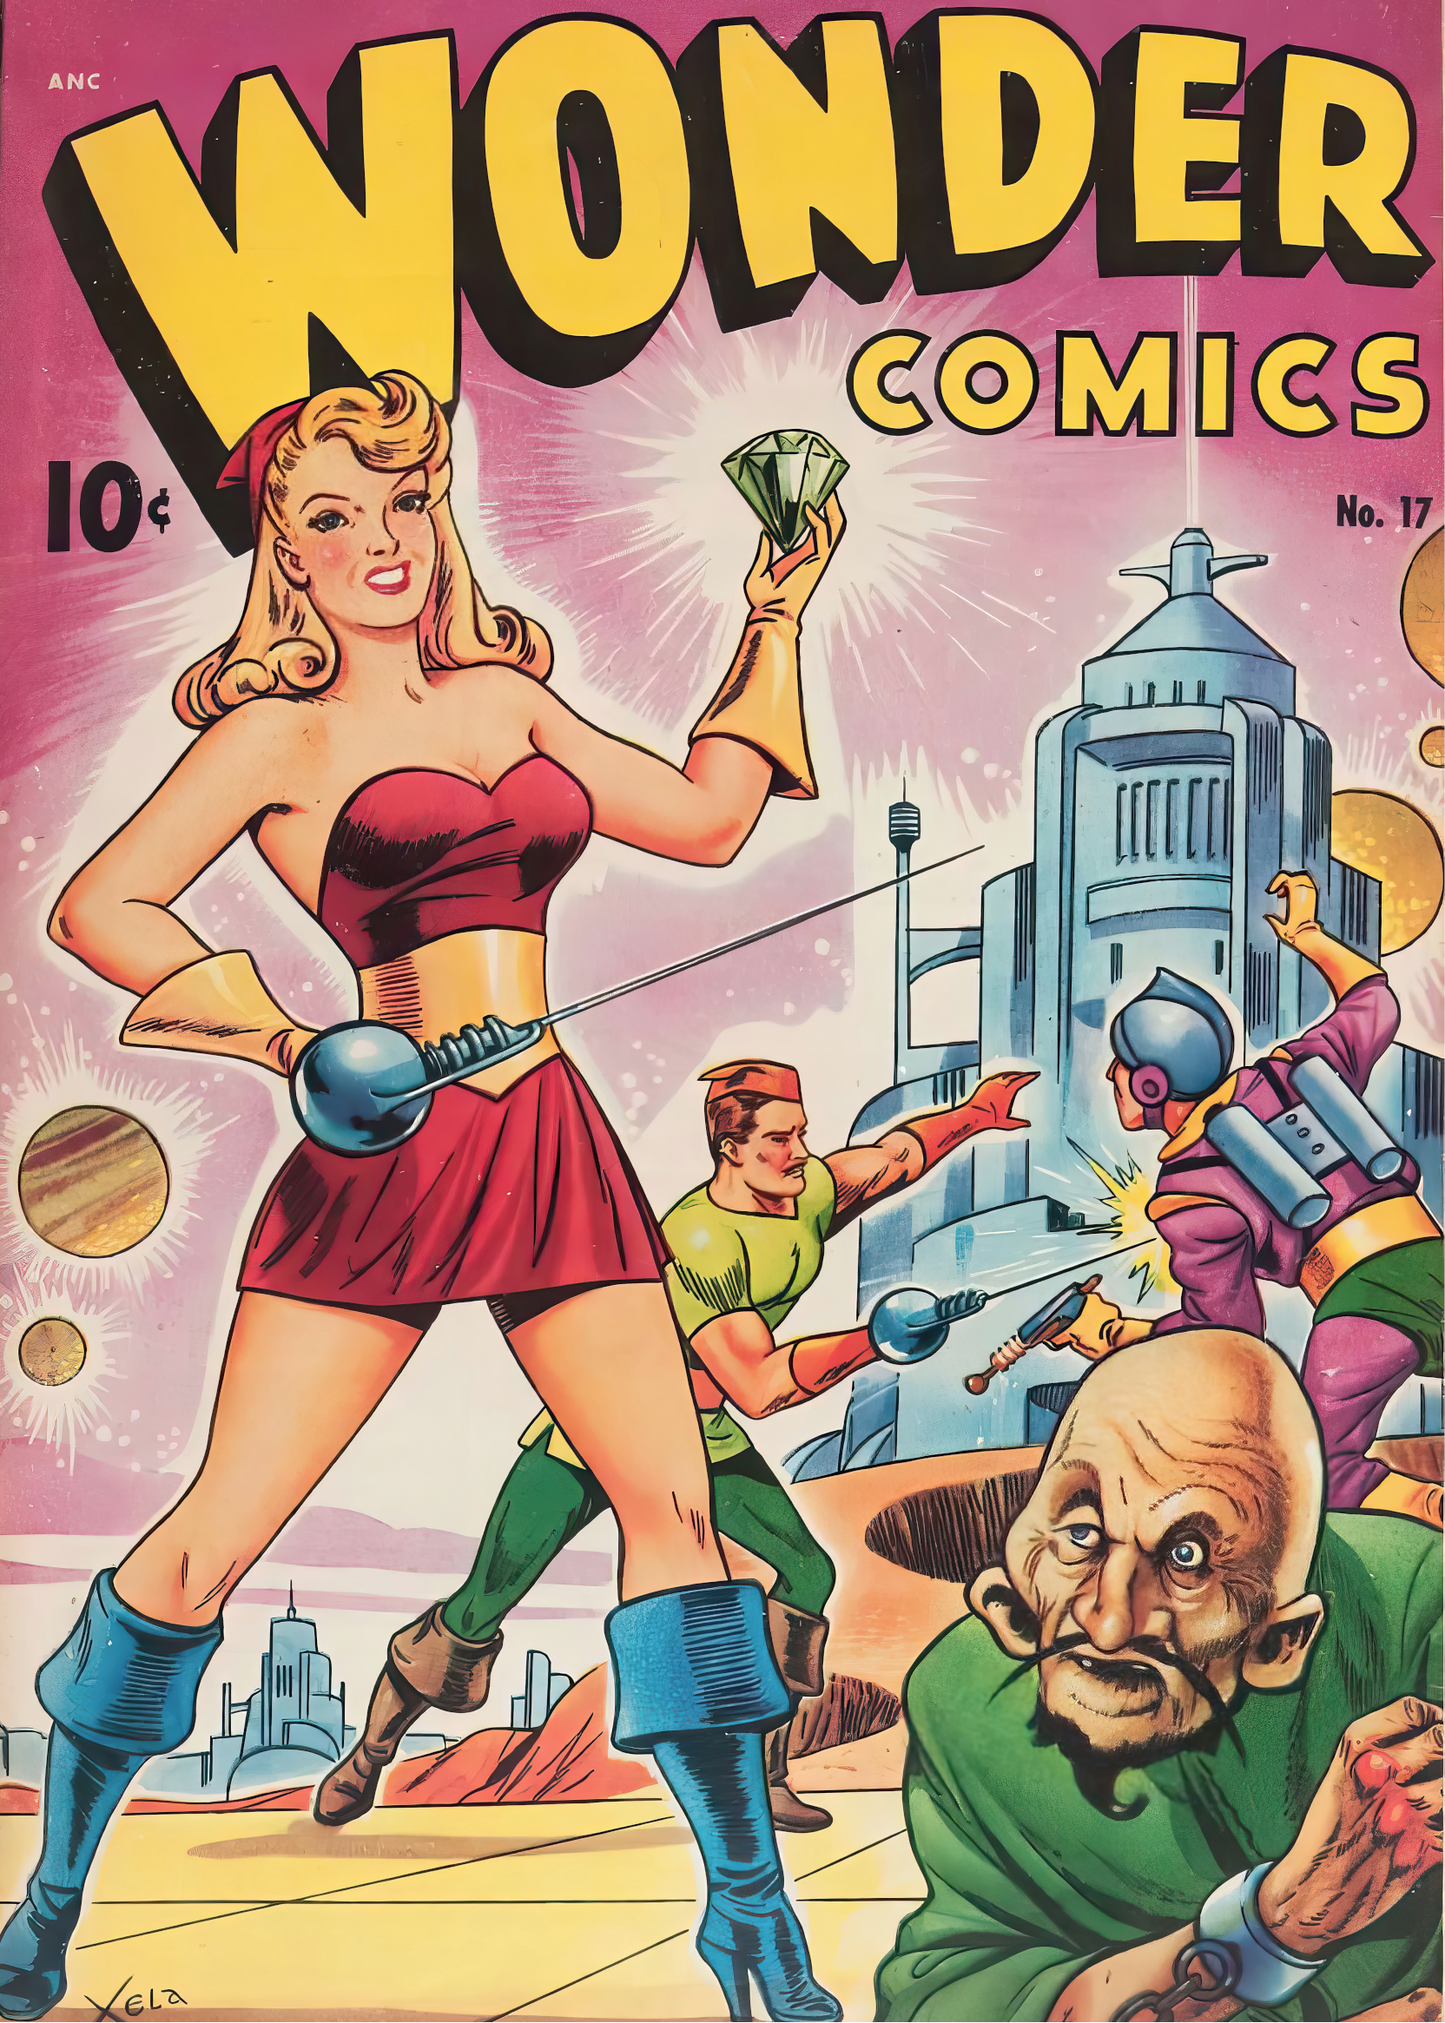 #1009 Wonder Comics #17